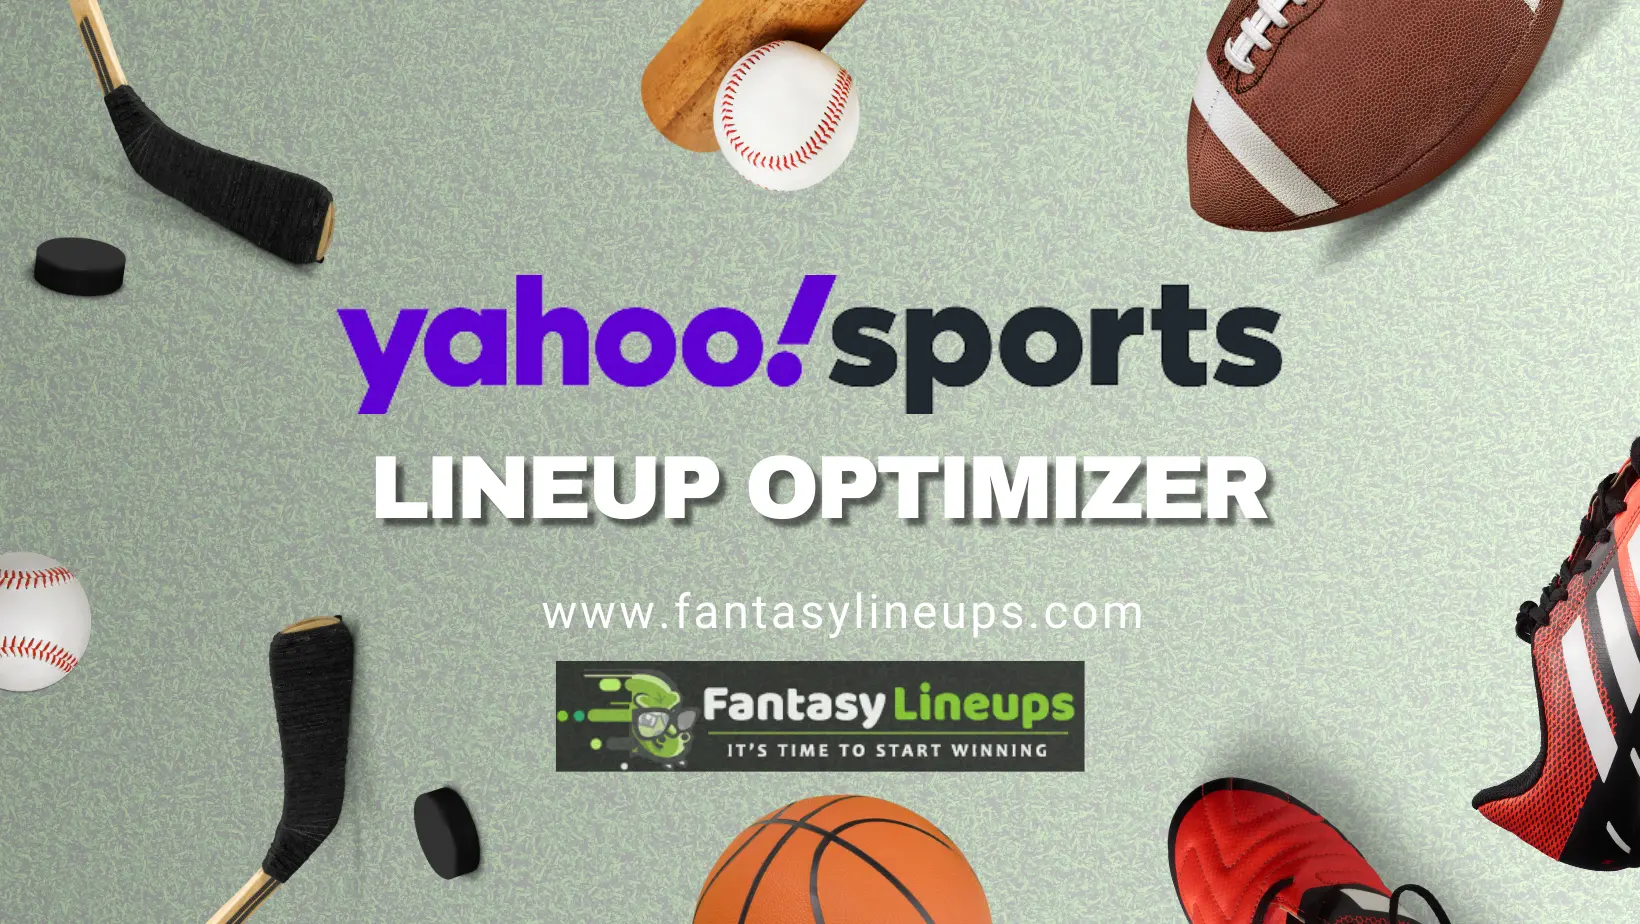 Enhance Your Yahoo Sports Daily Fantasy Experience with FantasyLineups.com